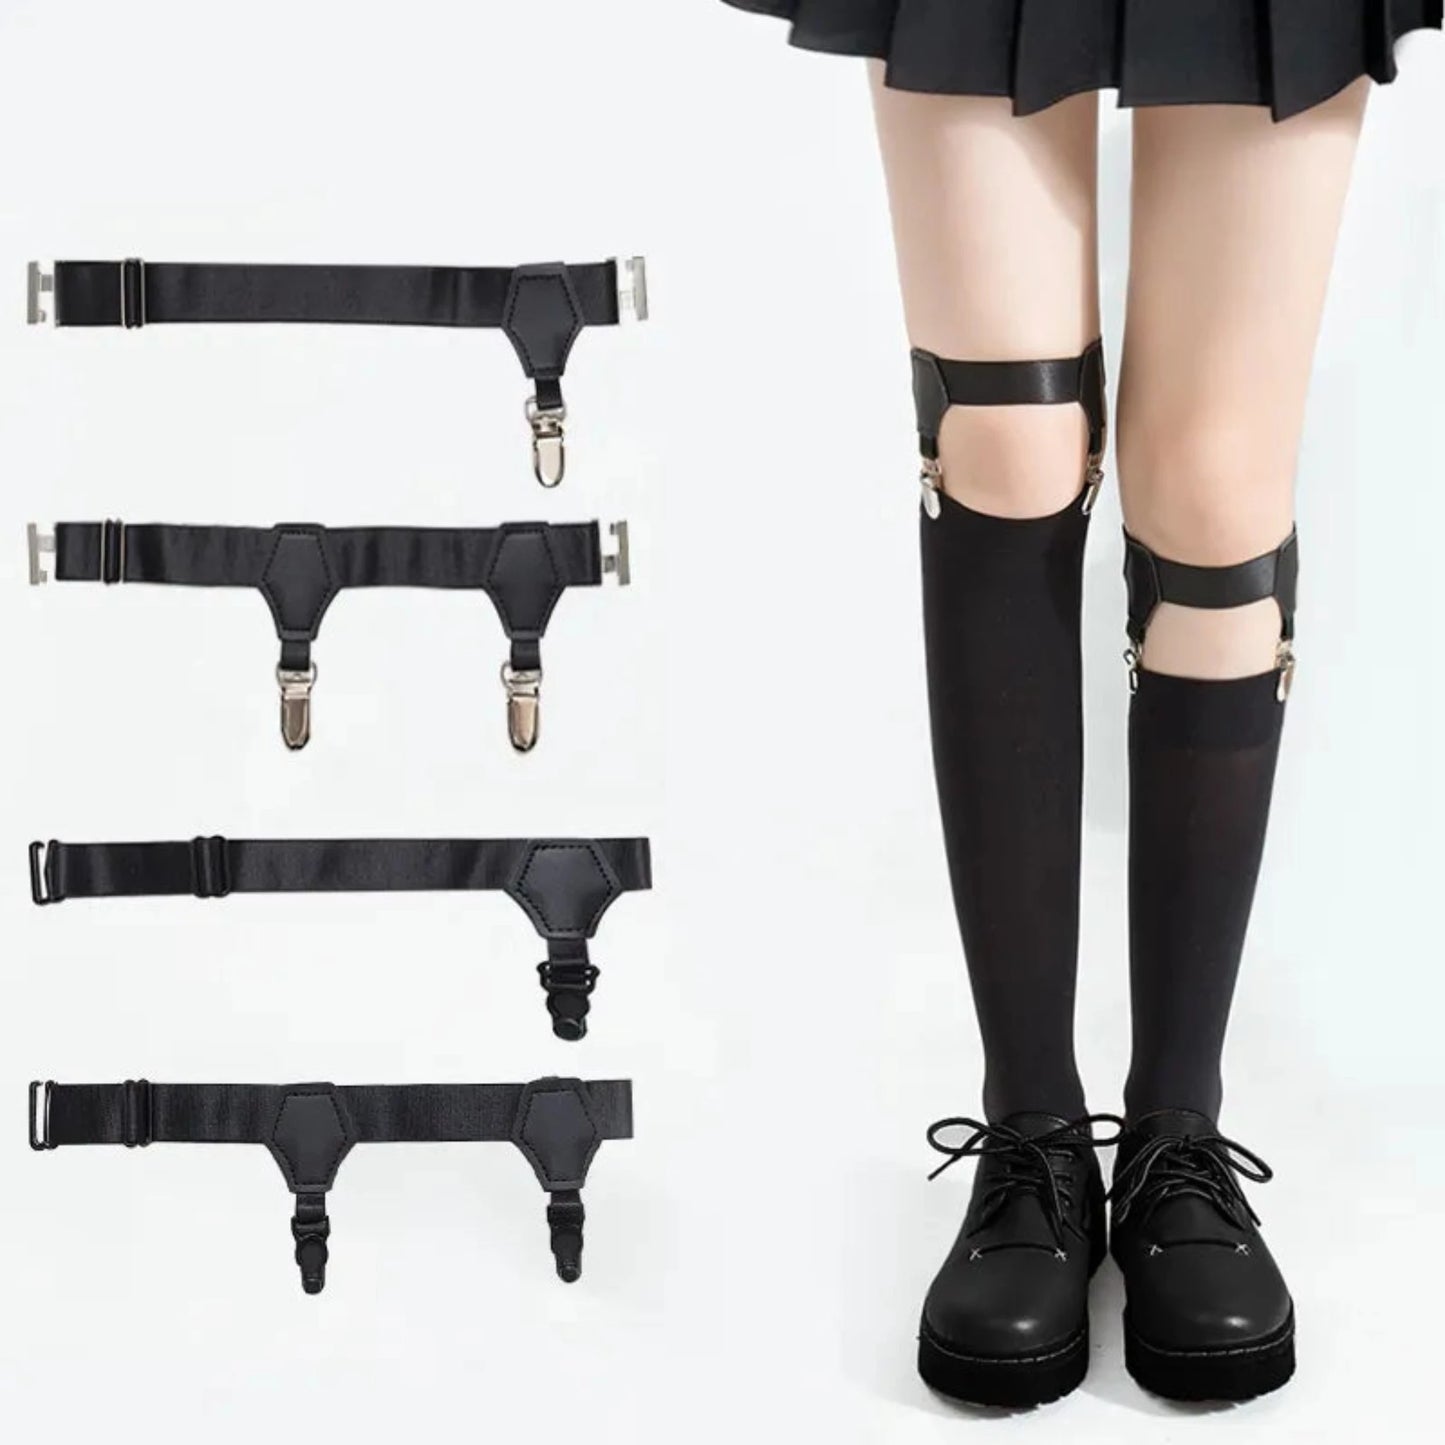 Adjustable Japanese Style Garters